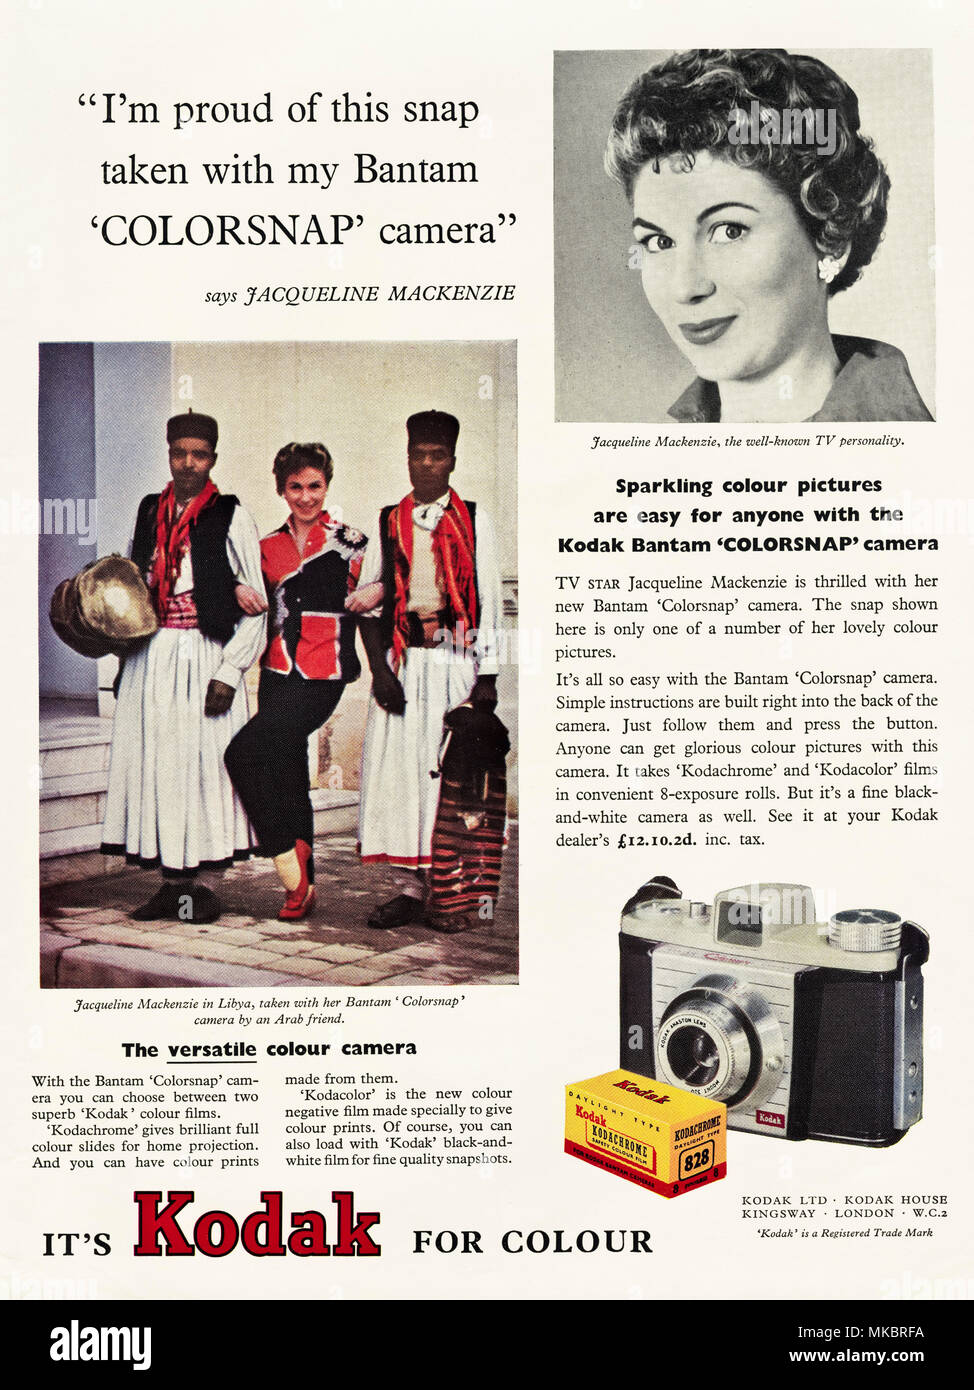 1950s vintage original advertisement advertising Kodak Kodachrome & Kodacolor film and Bantam Colorsnap camera featuring TV personality Jacqueline Mackenzie in English magazine circa 1958 Stock Photo